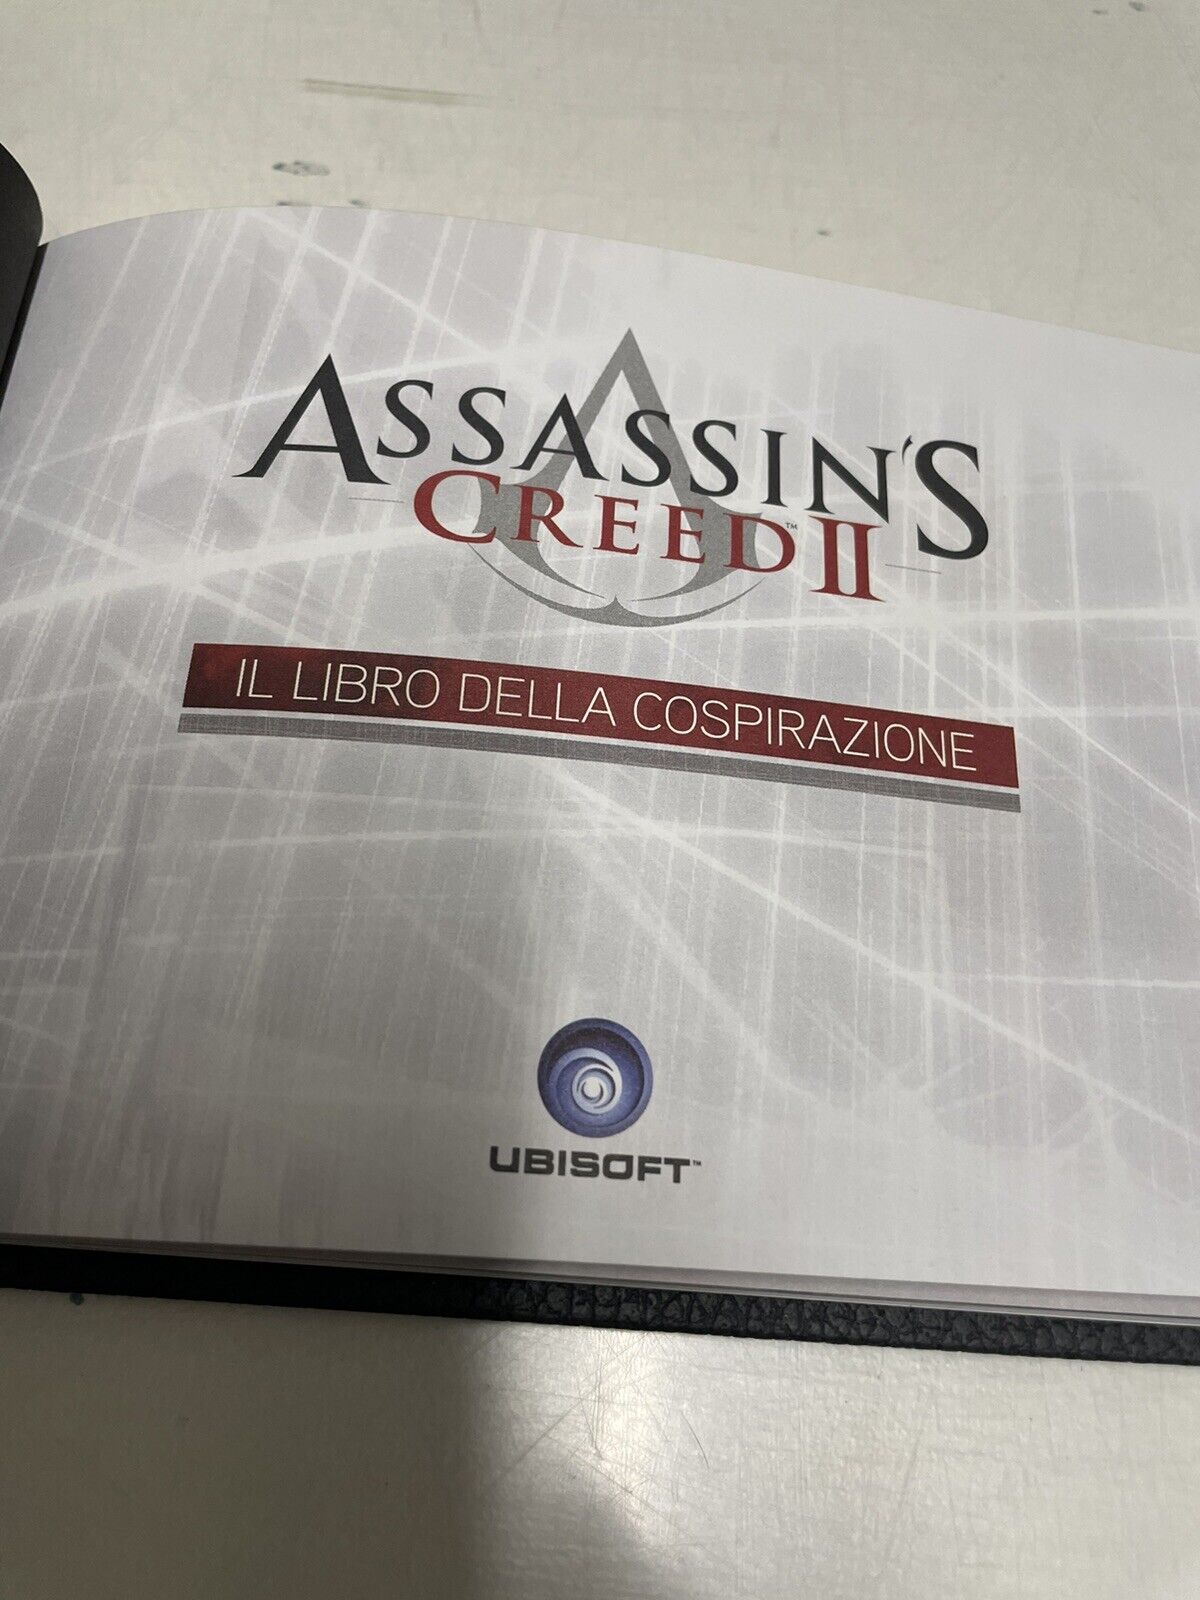 Ps3-Playstation-Assassins-Creed-2-Pal-ita-DVD-Artbook-Bundle-144834335614-6